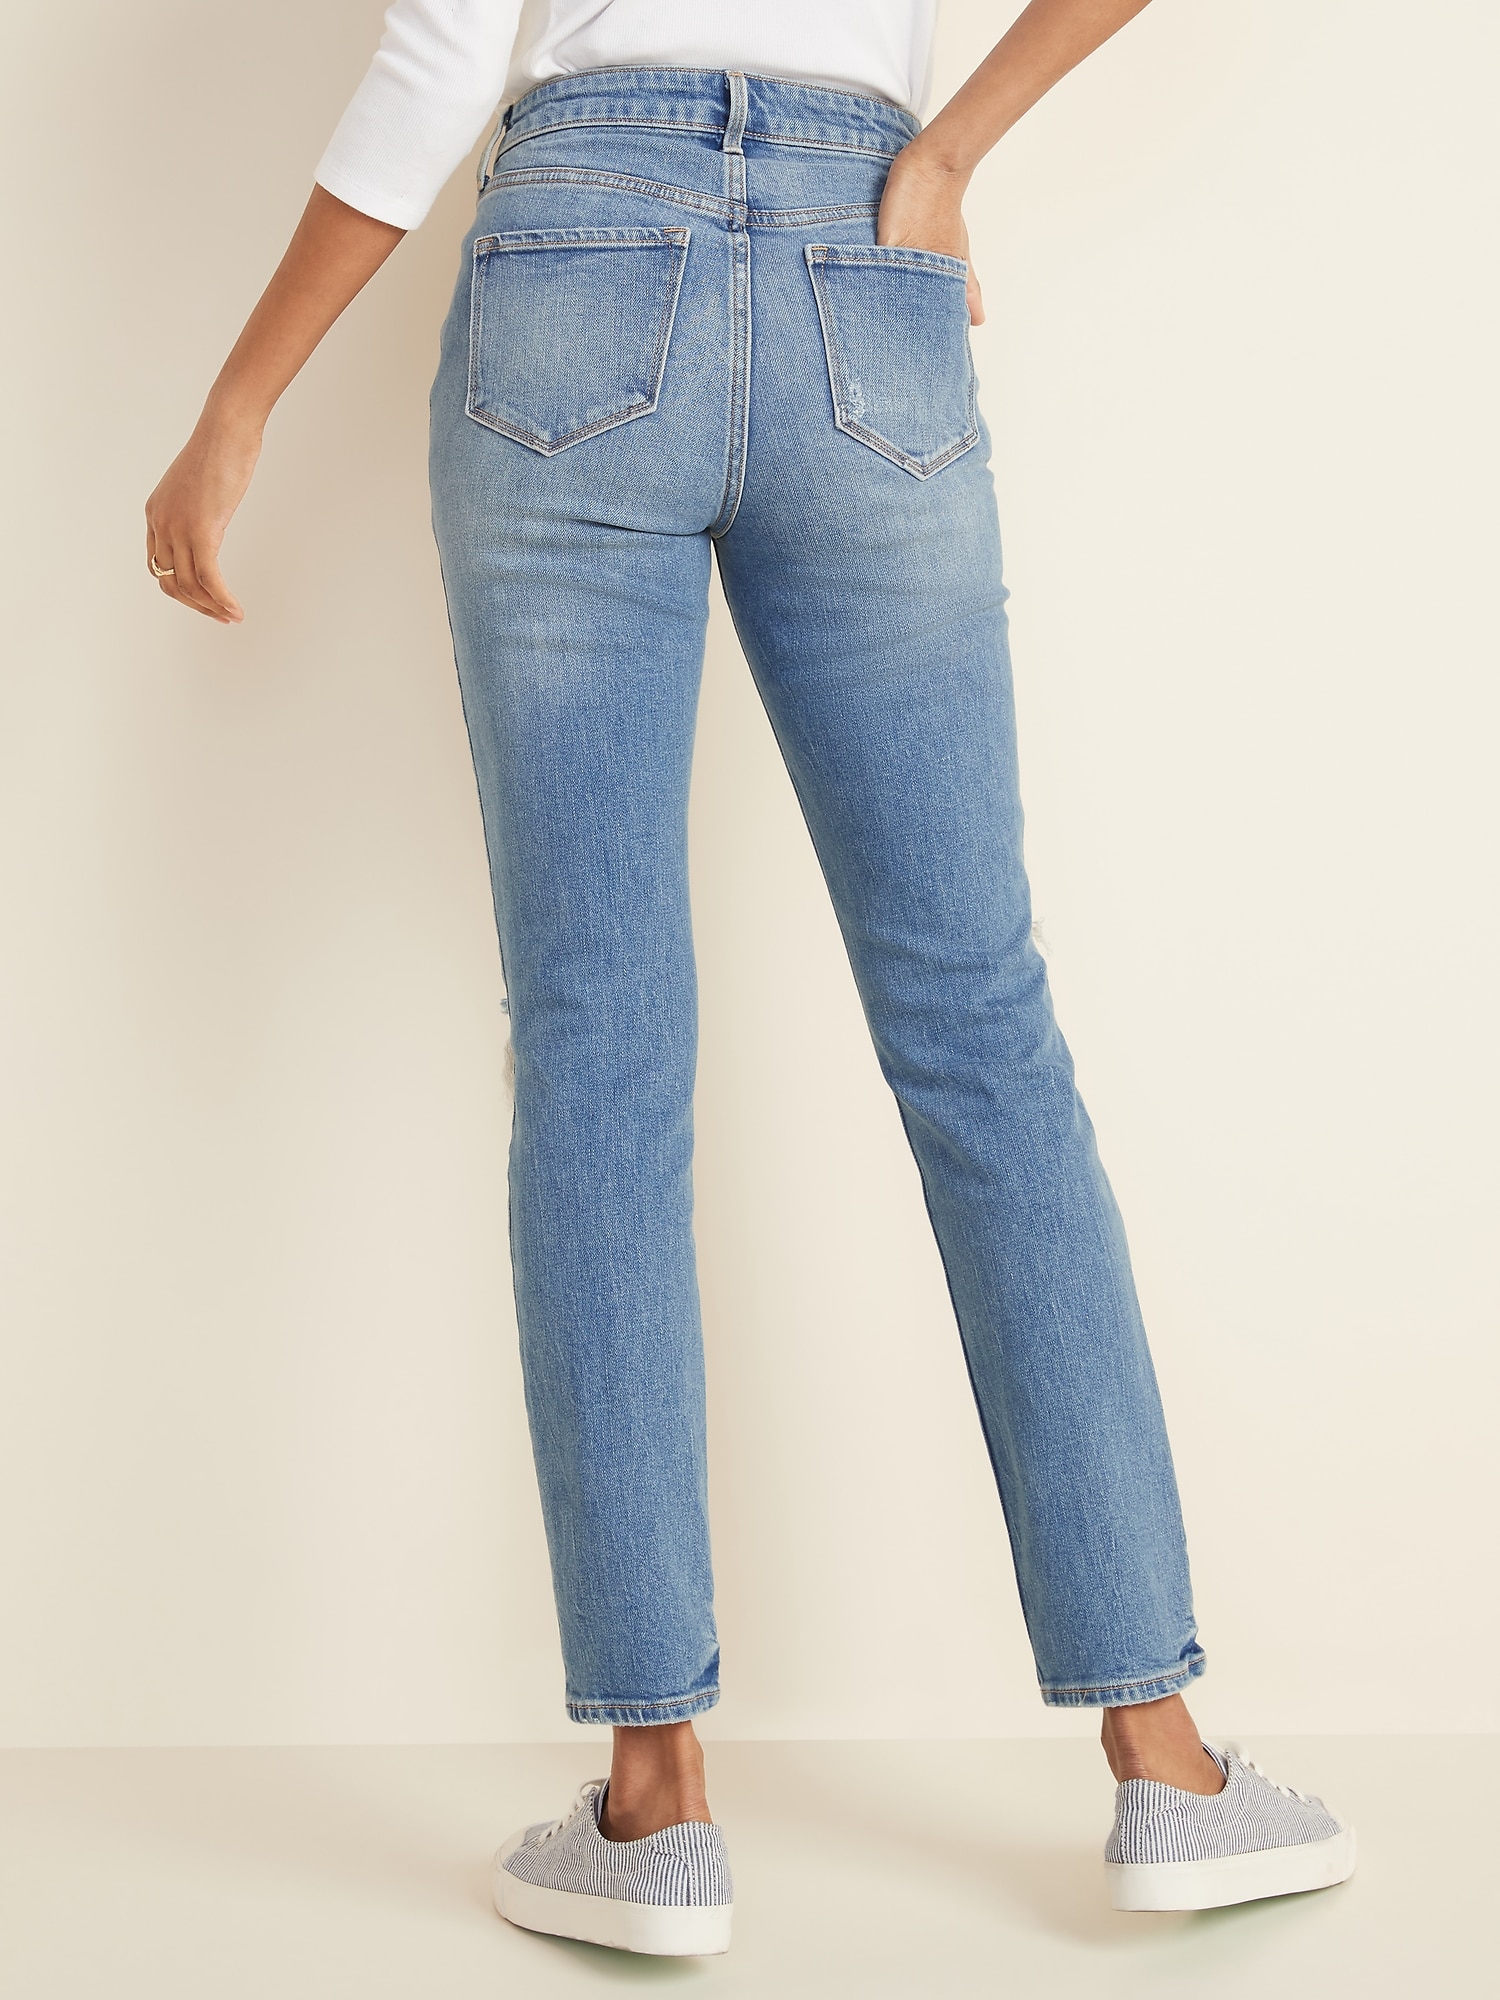 gap slim straight jeans womens